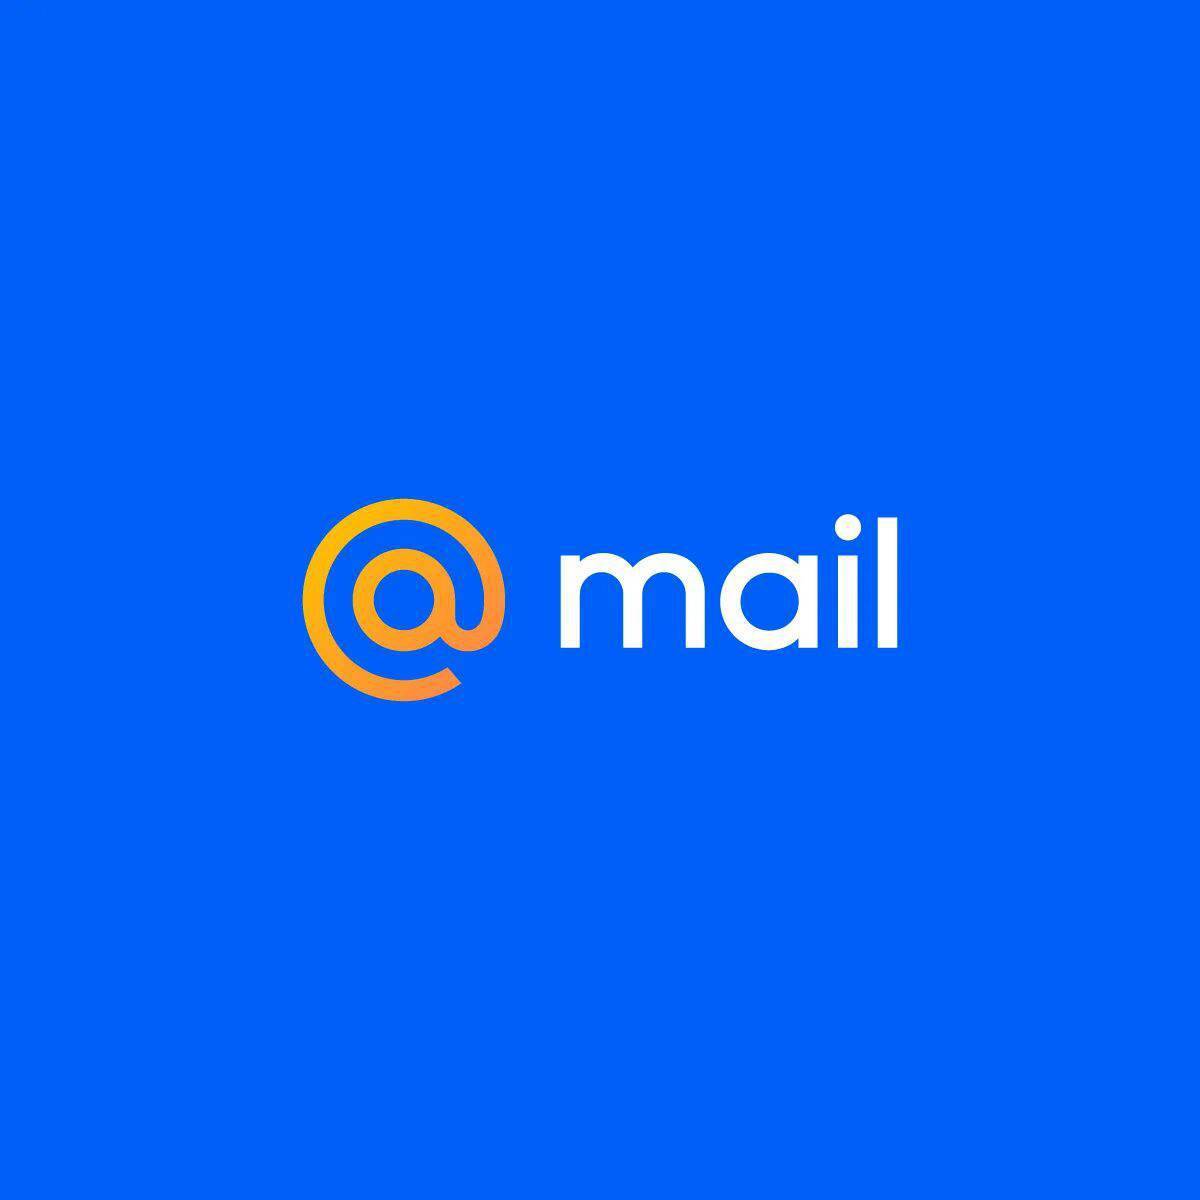 Аватарка майл ру. Mail. Логотип мейл ру. Матл. Почта майл ру.